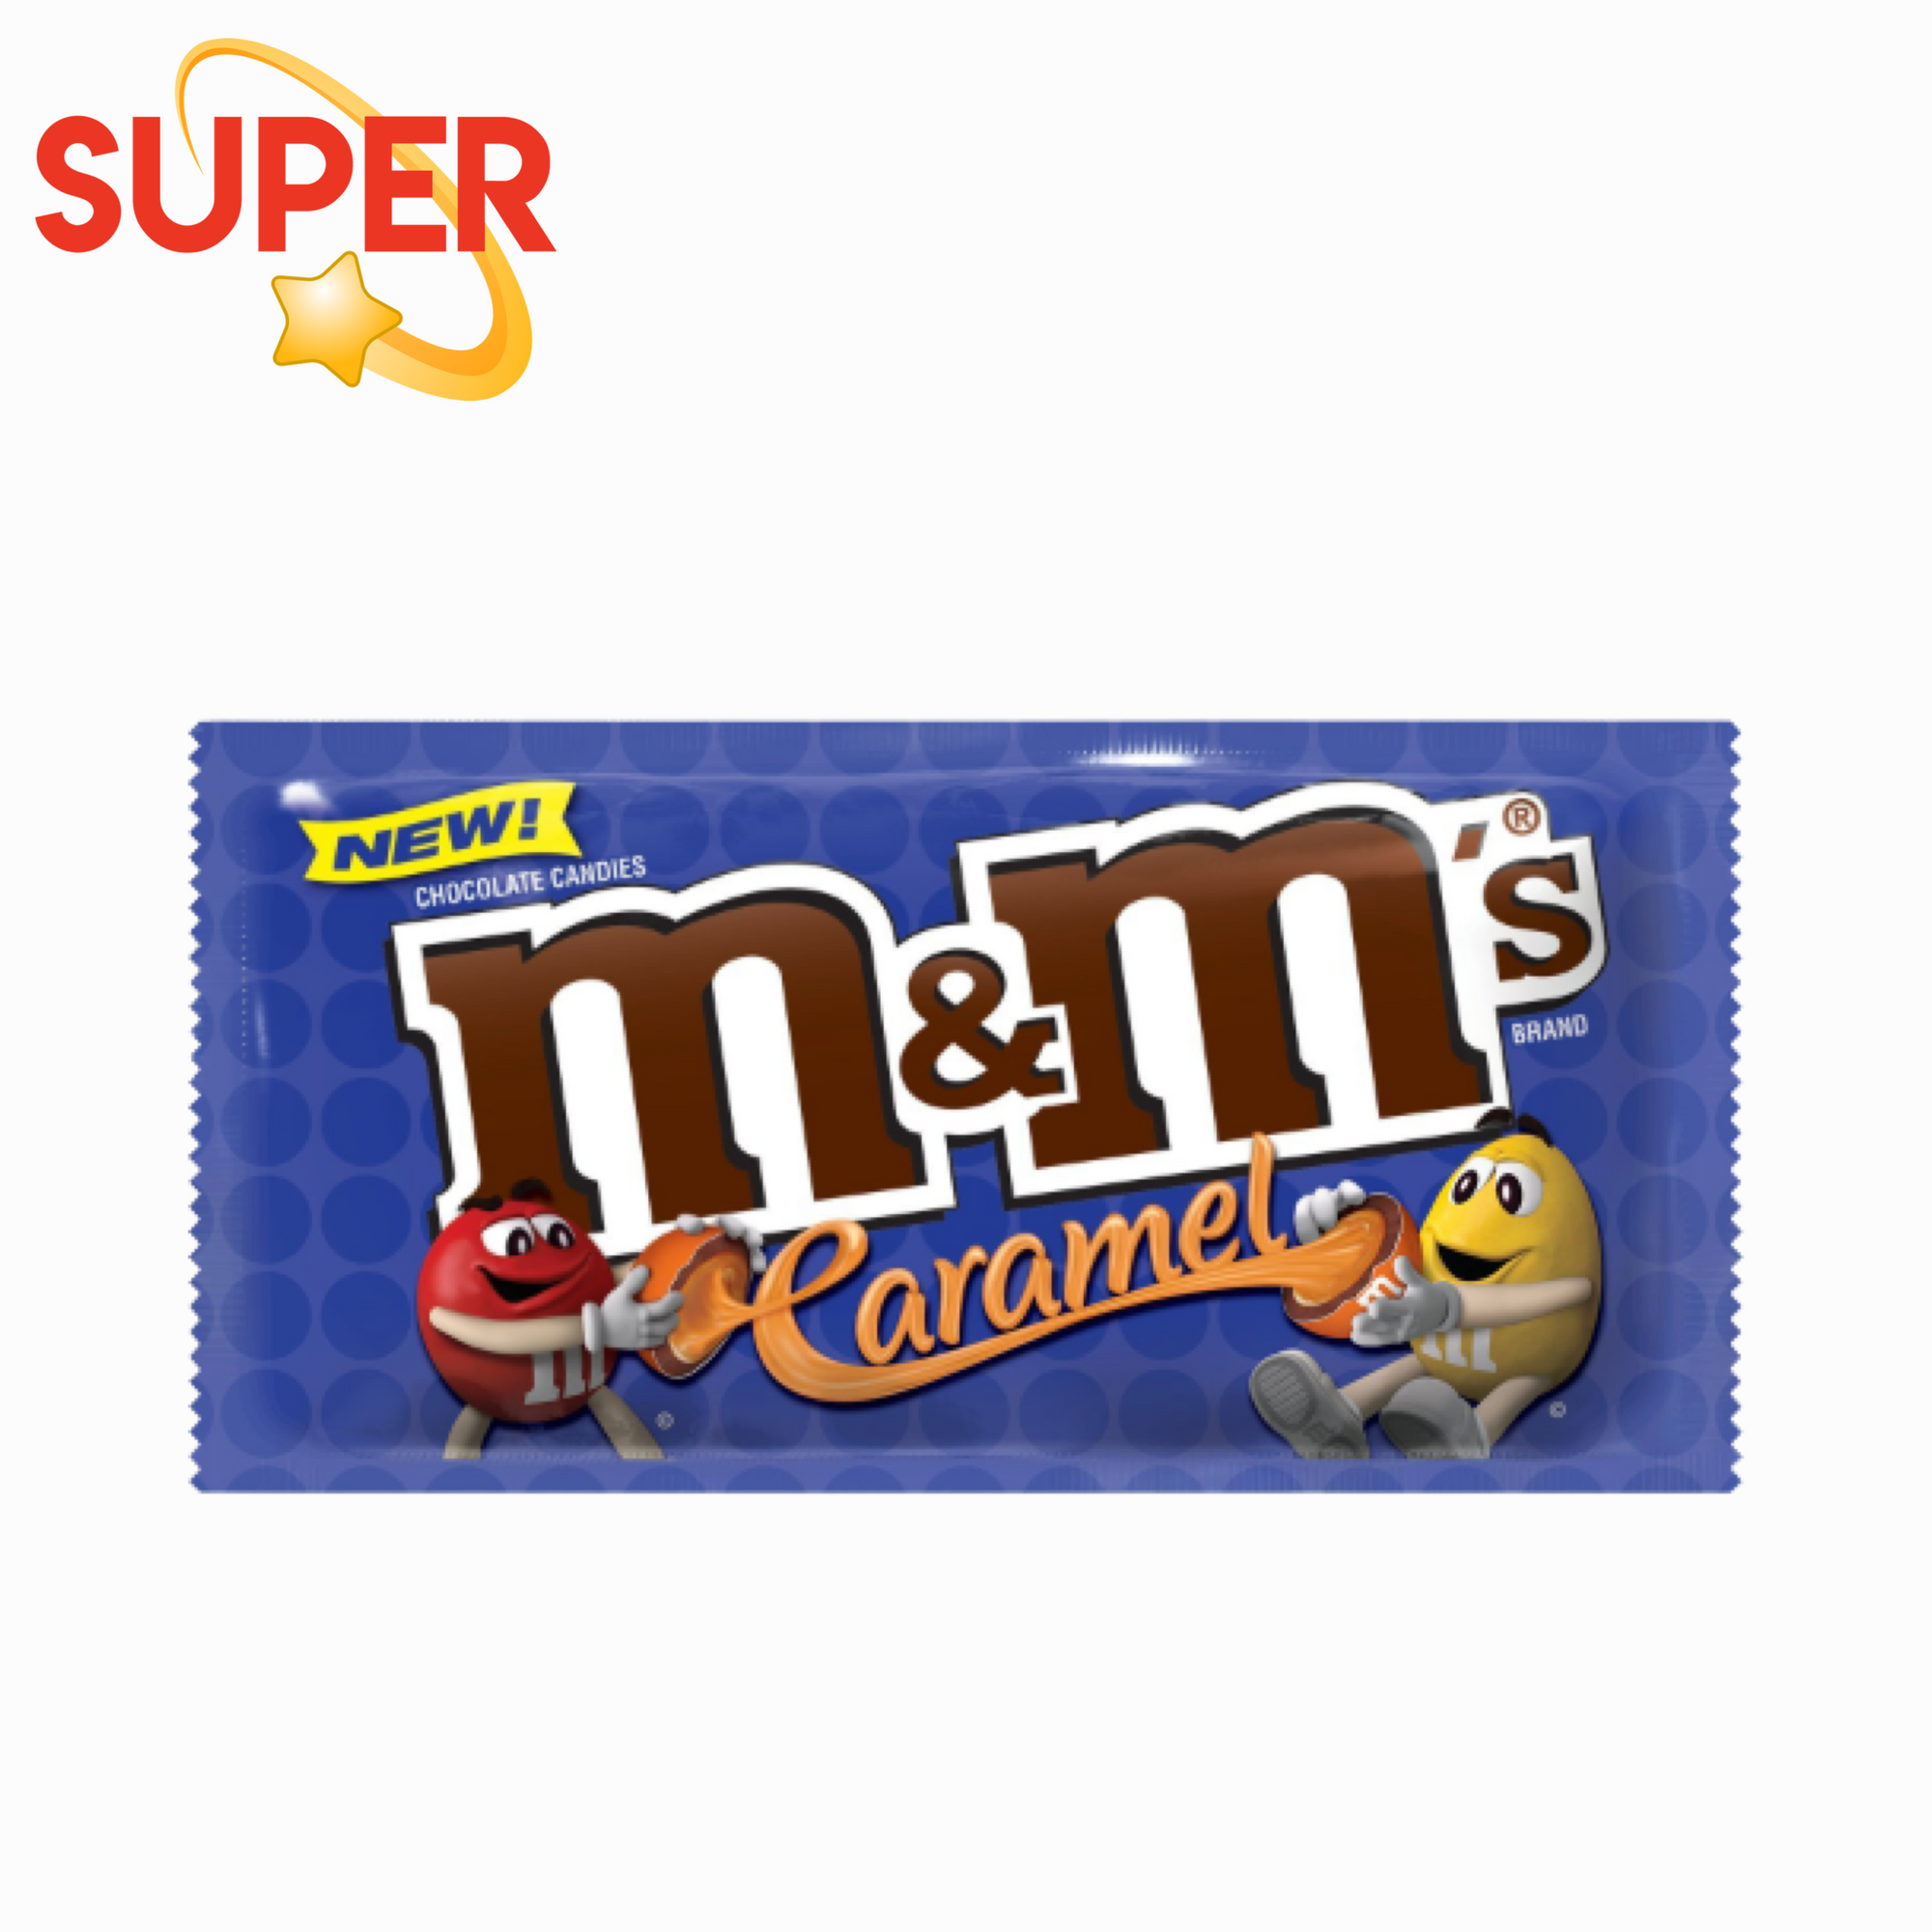 M&M - 24 Pack (1 Box) - Caramel - Super Wholesale USA